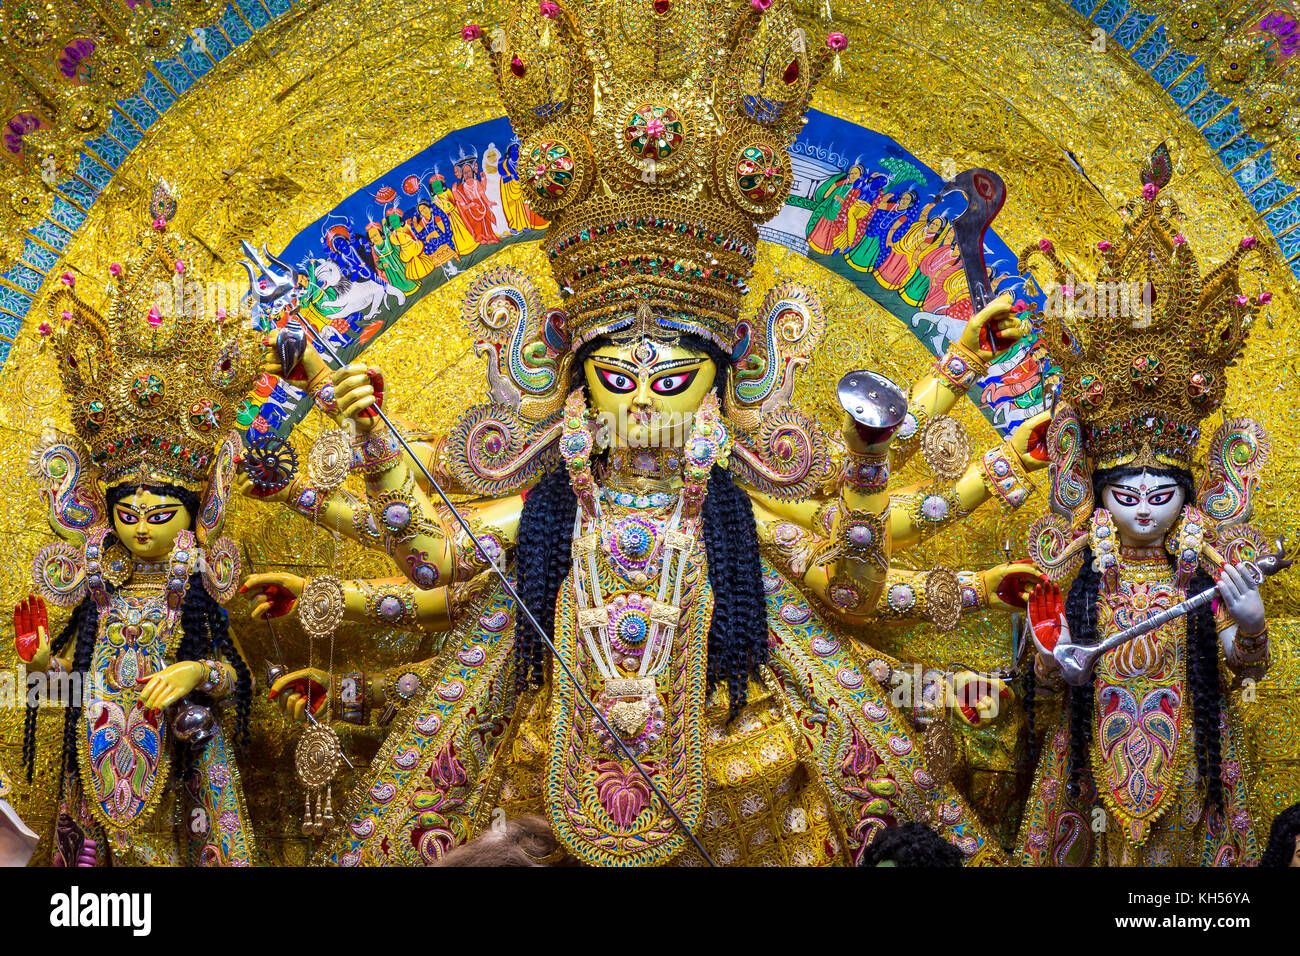 Goddess Durga along with other Hindu deities at Durga Puja festival in Kolkata, India. Stock Photo